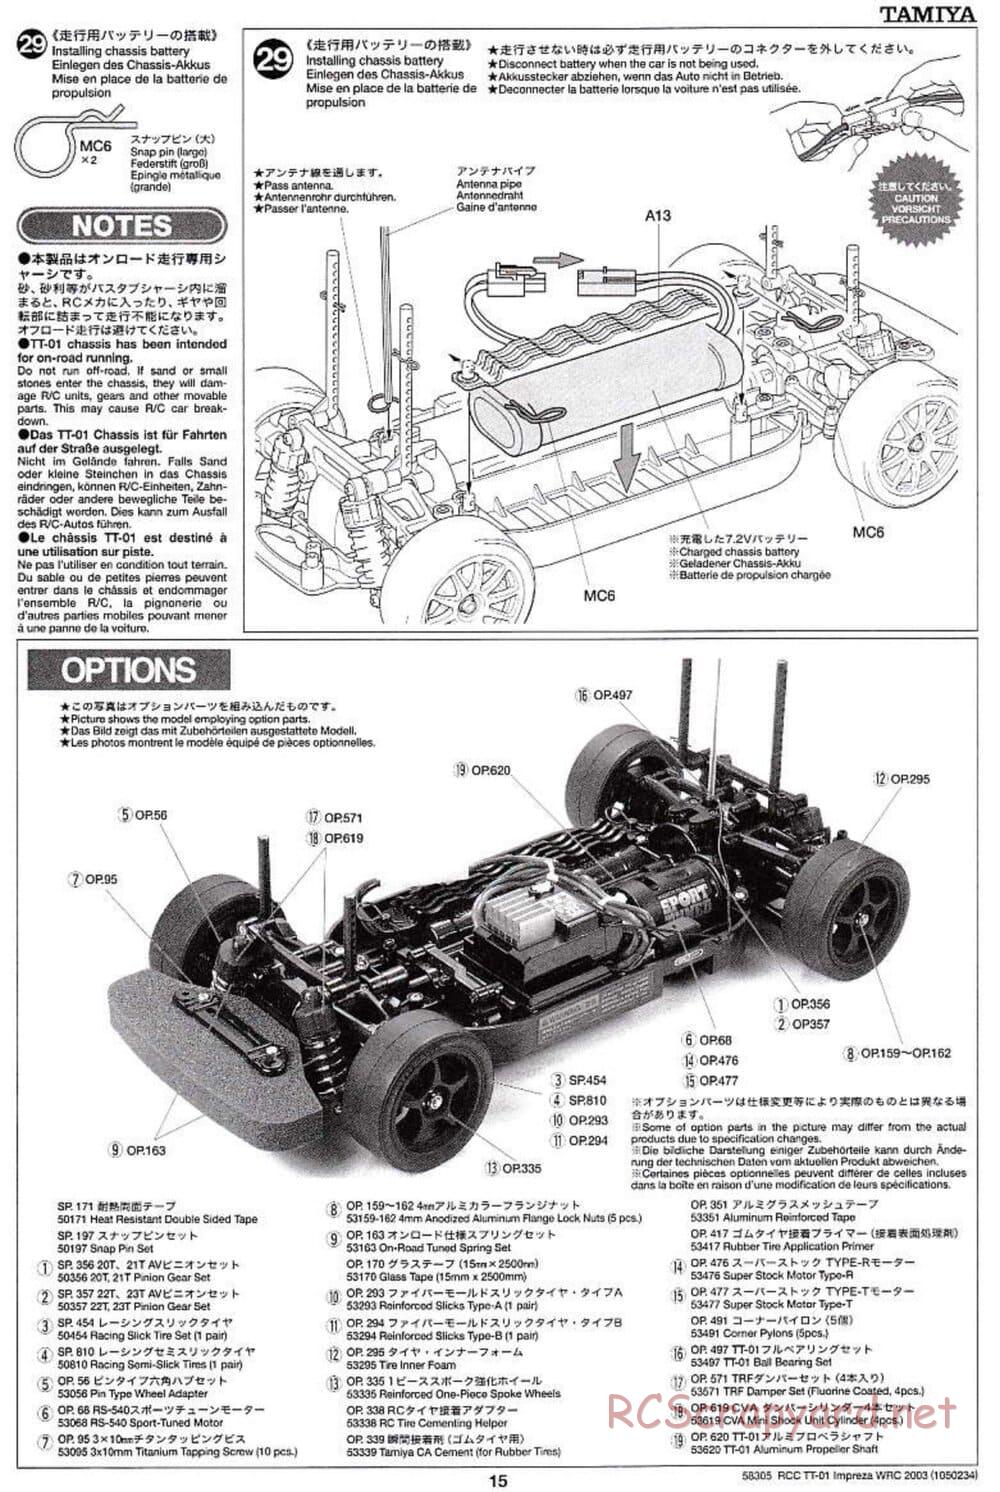 Tamiya - Subaru Impreza WRC 2003 - TT-01 Chassis - Manual - Page 15